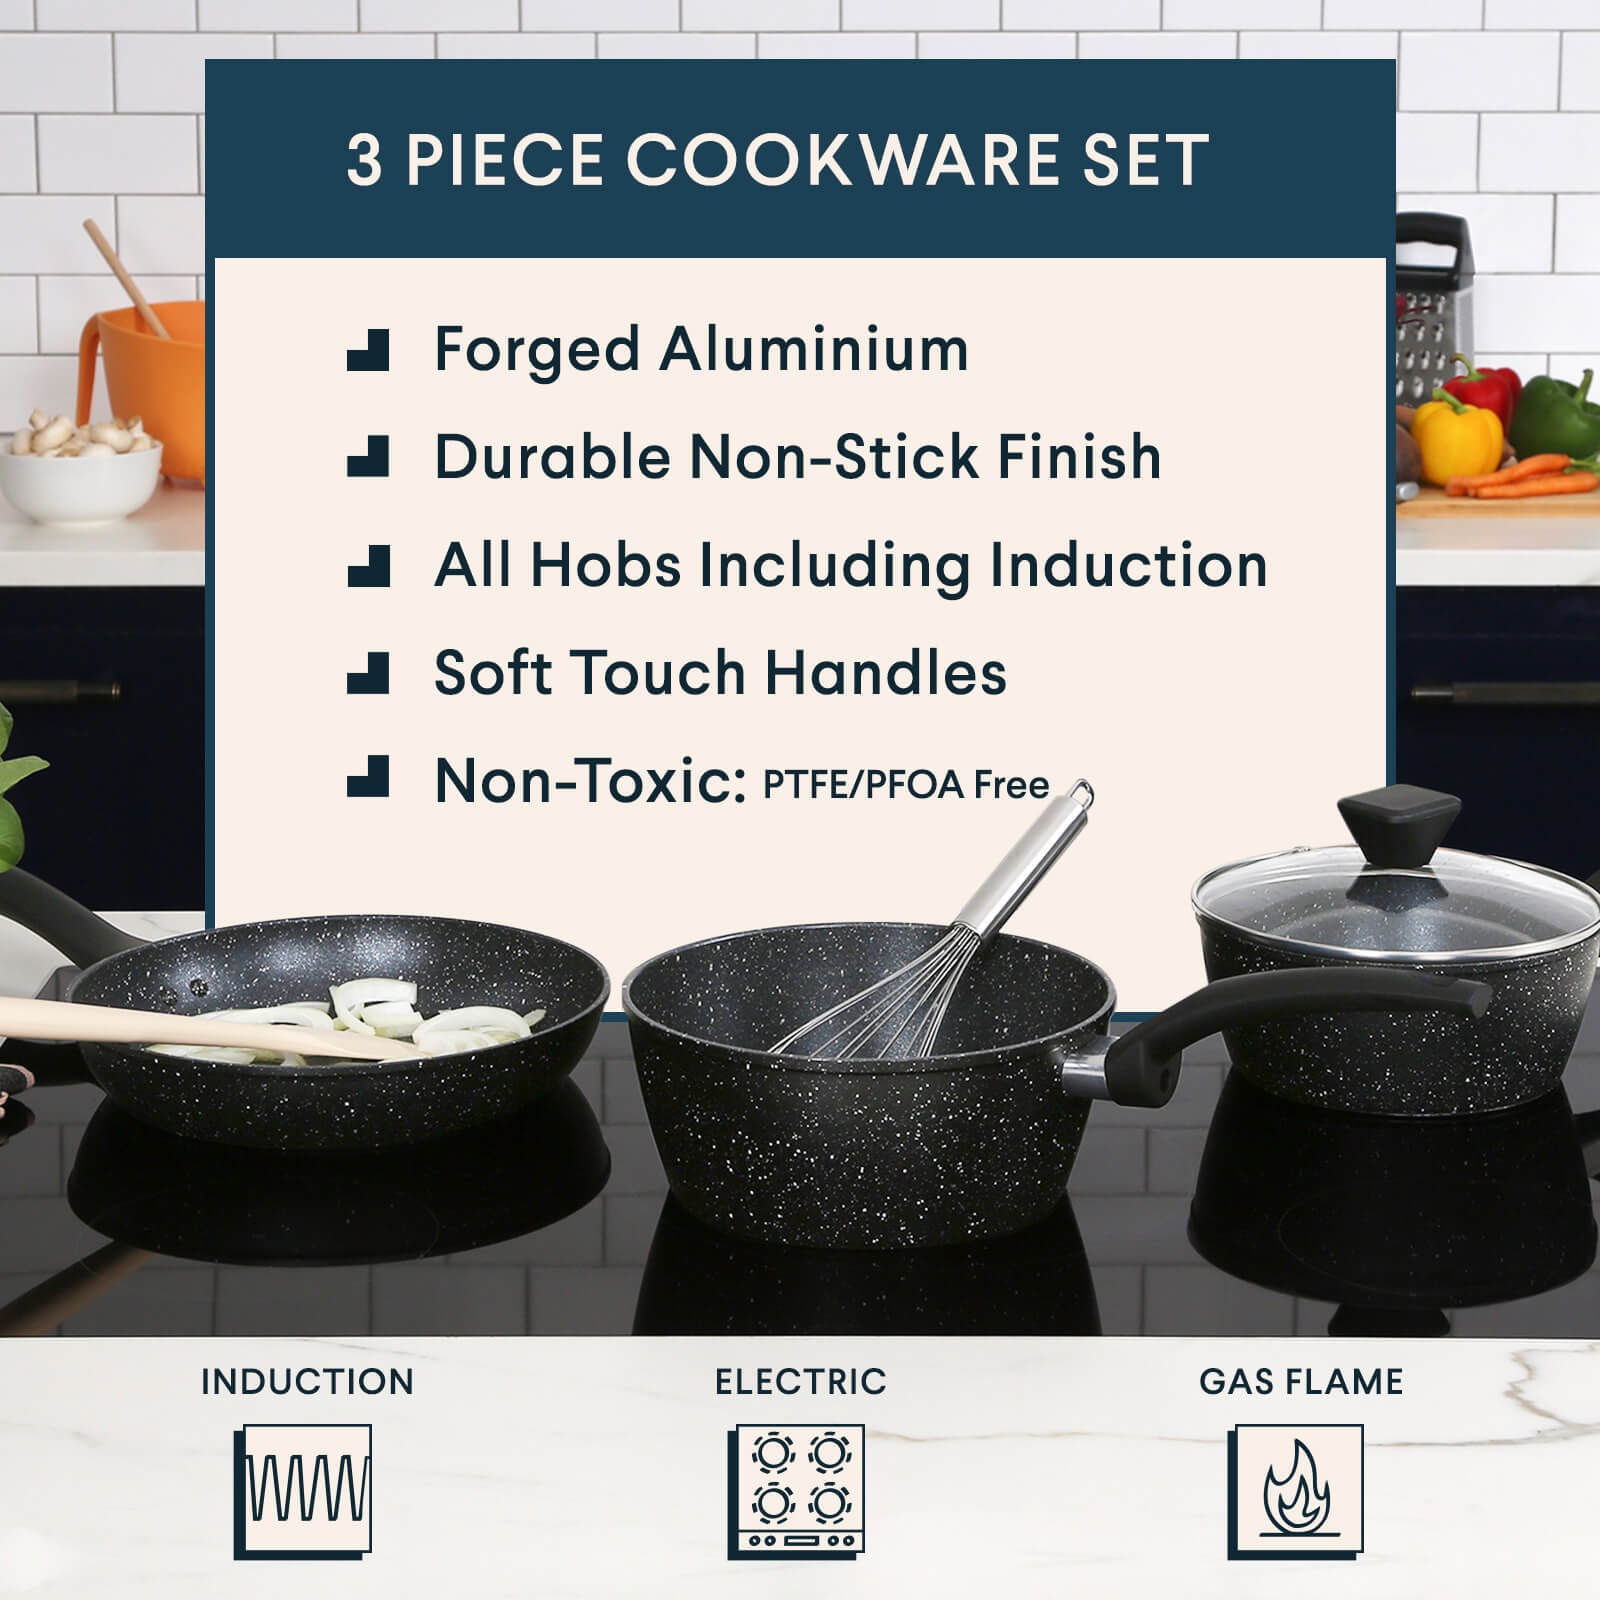 Standard Kitchen Starter Kit / Pack (65+ Items) - Kitchenware & Cookware Essentials, Kitchen Utensil Pack, Non-Stick Pots and Pans Set, Kitchen Tools